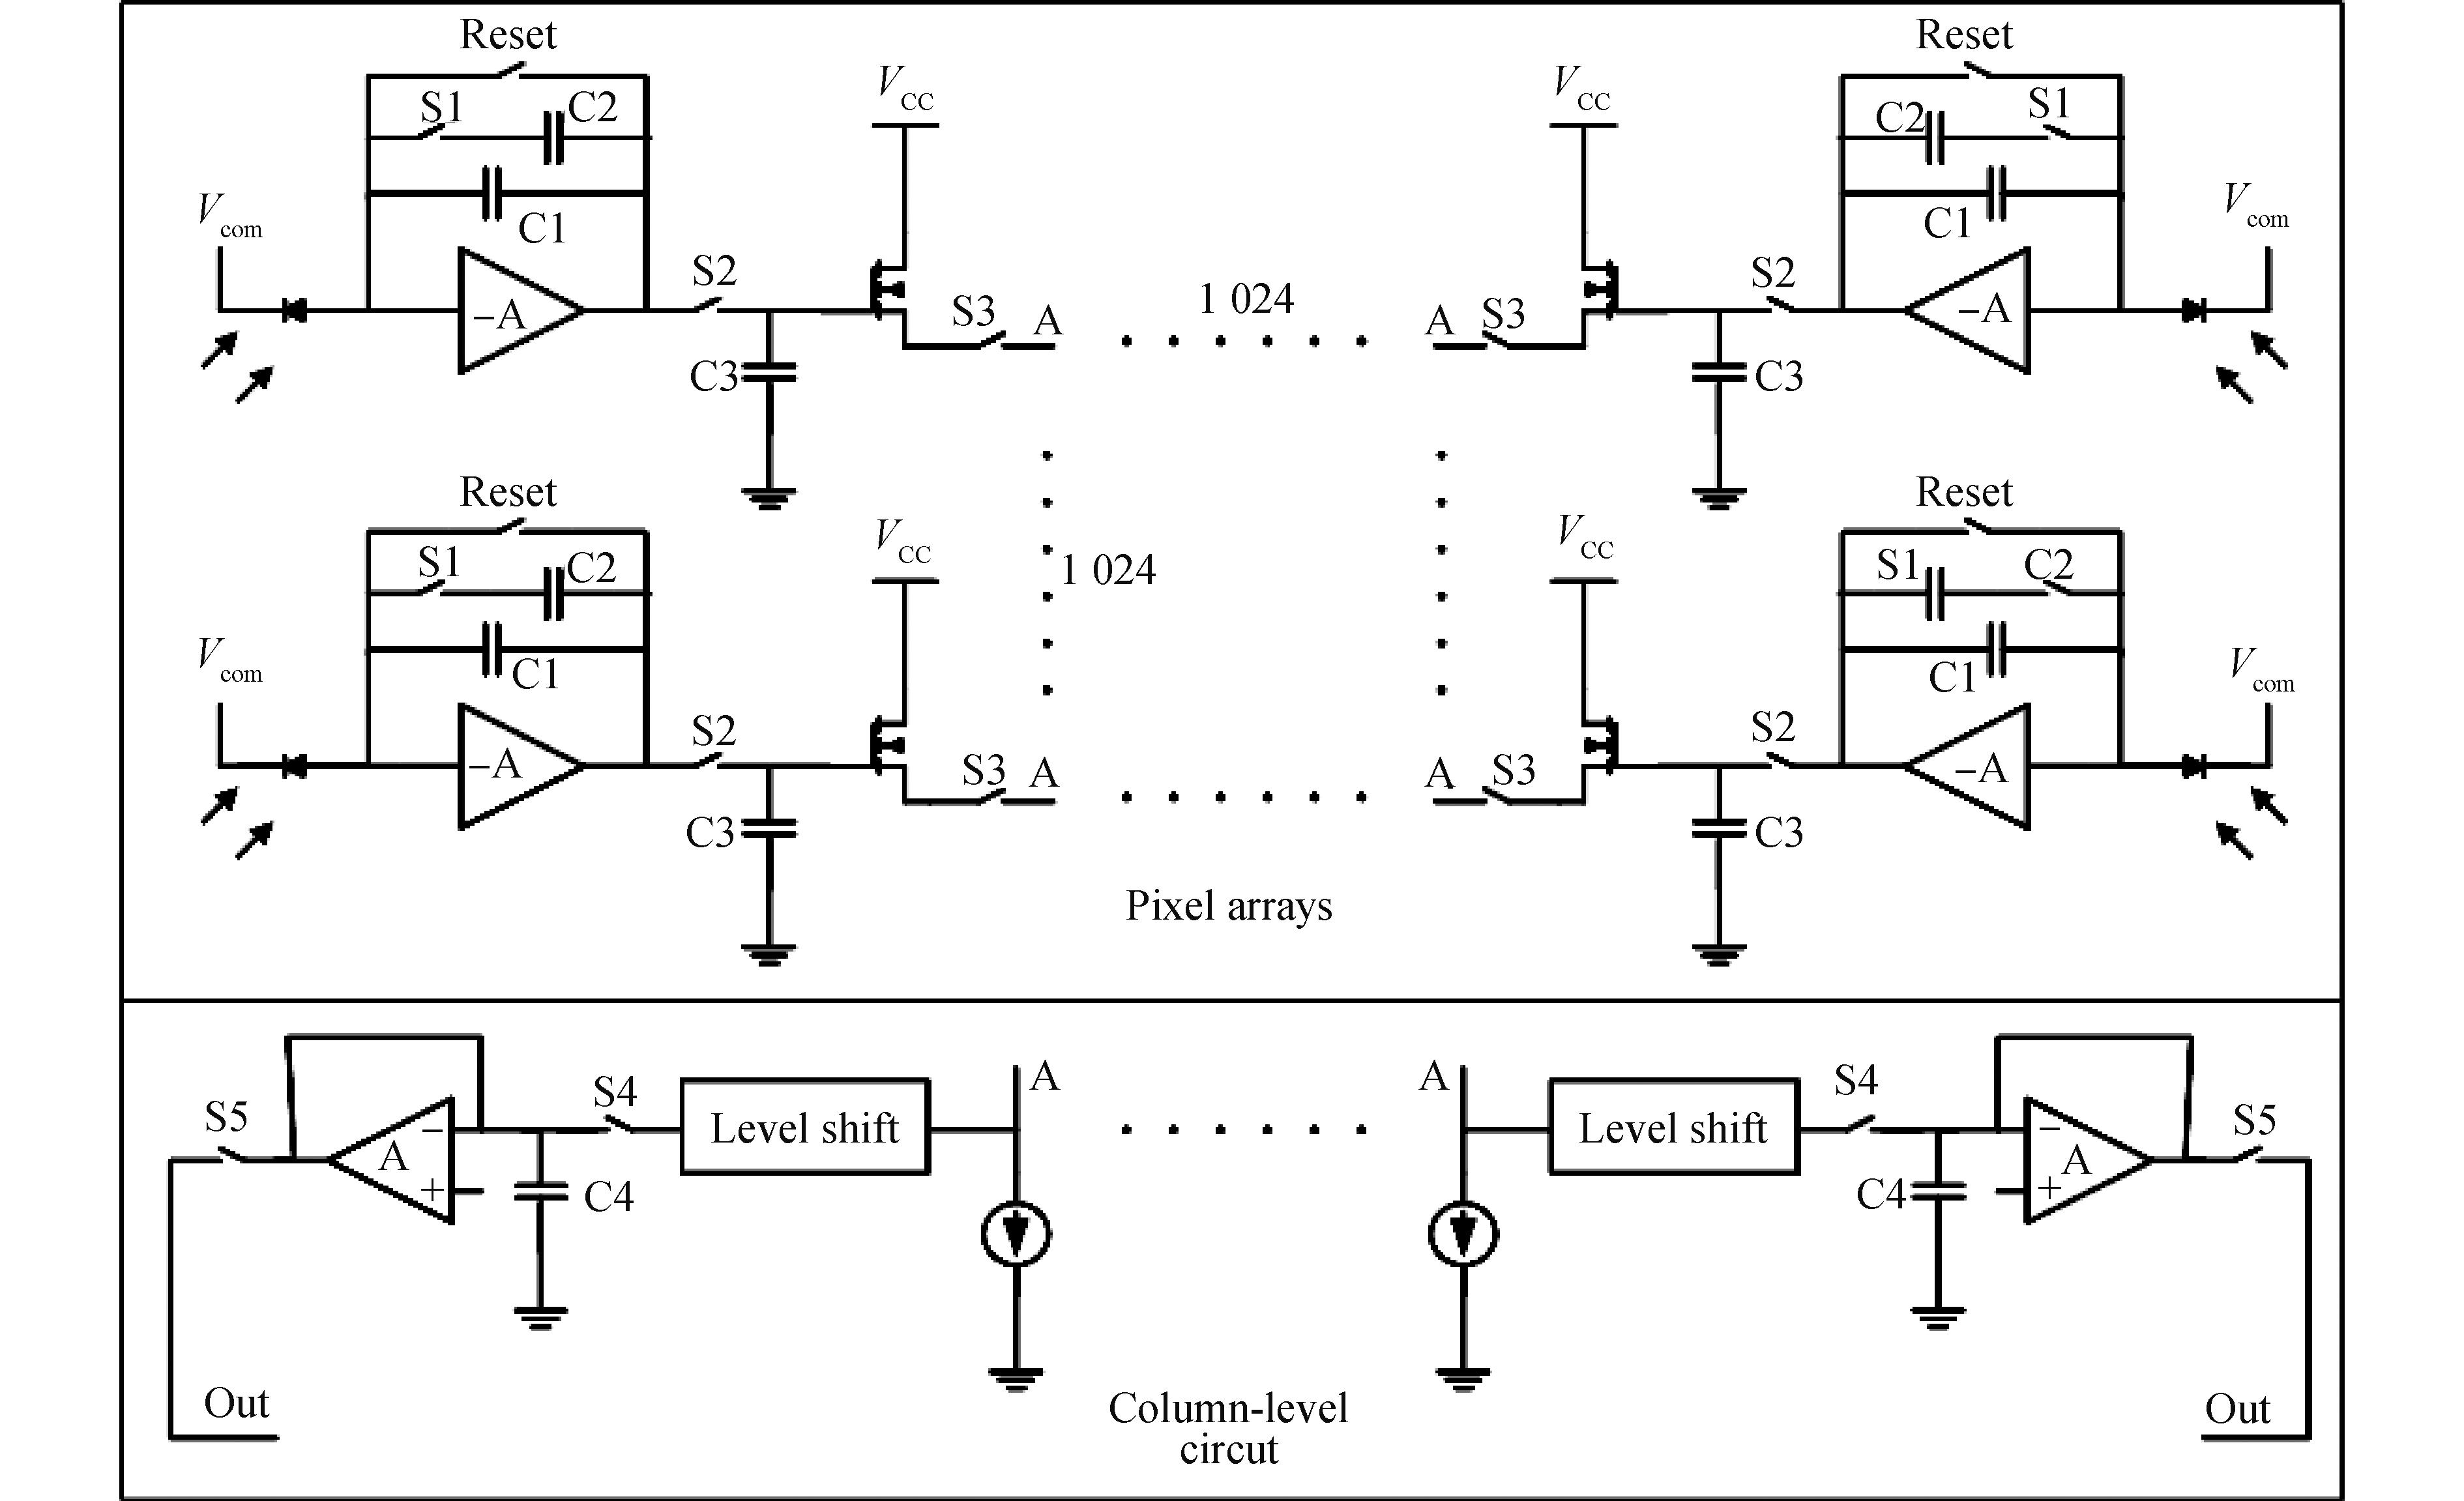 Pixel arrays and column level circuits